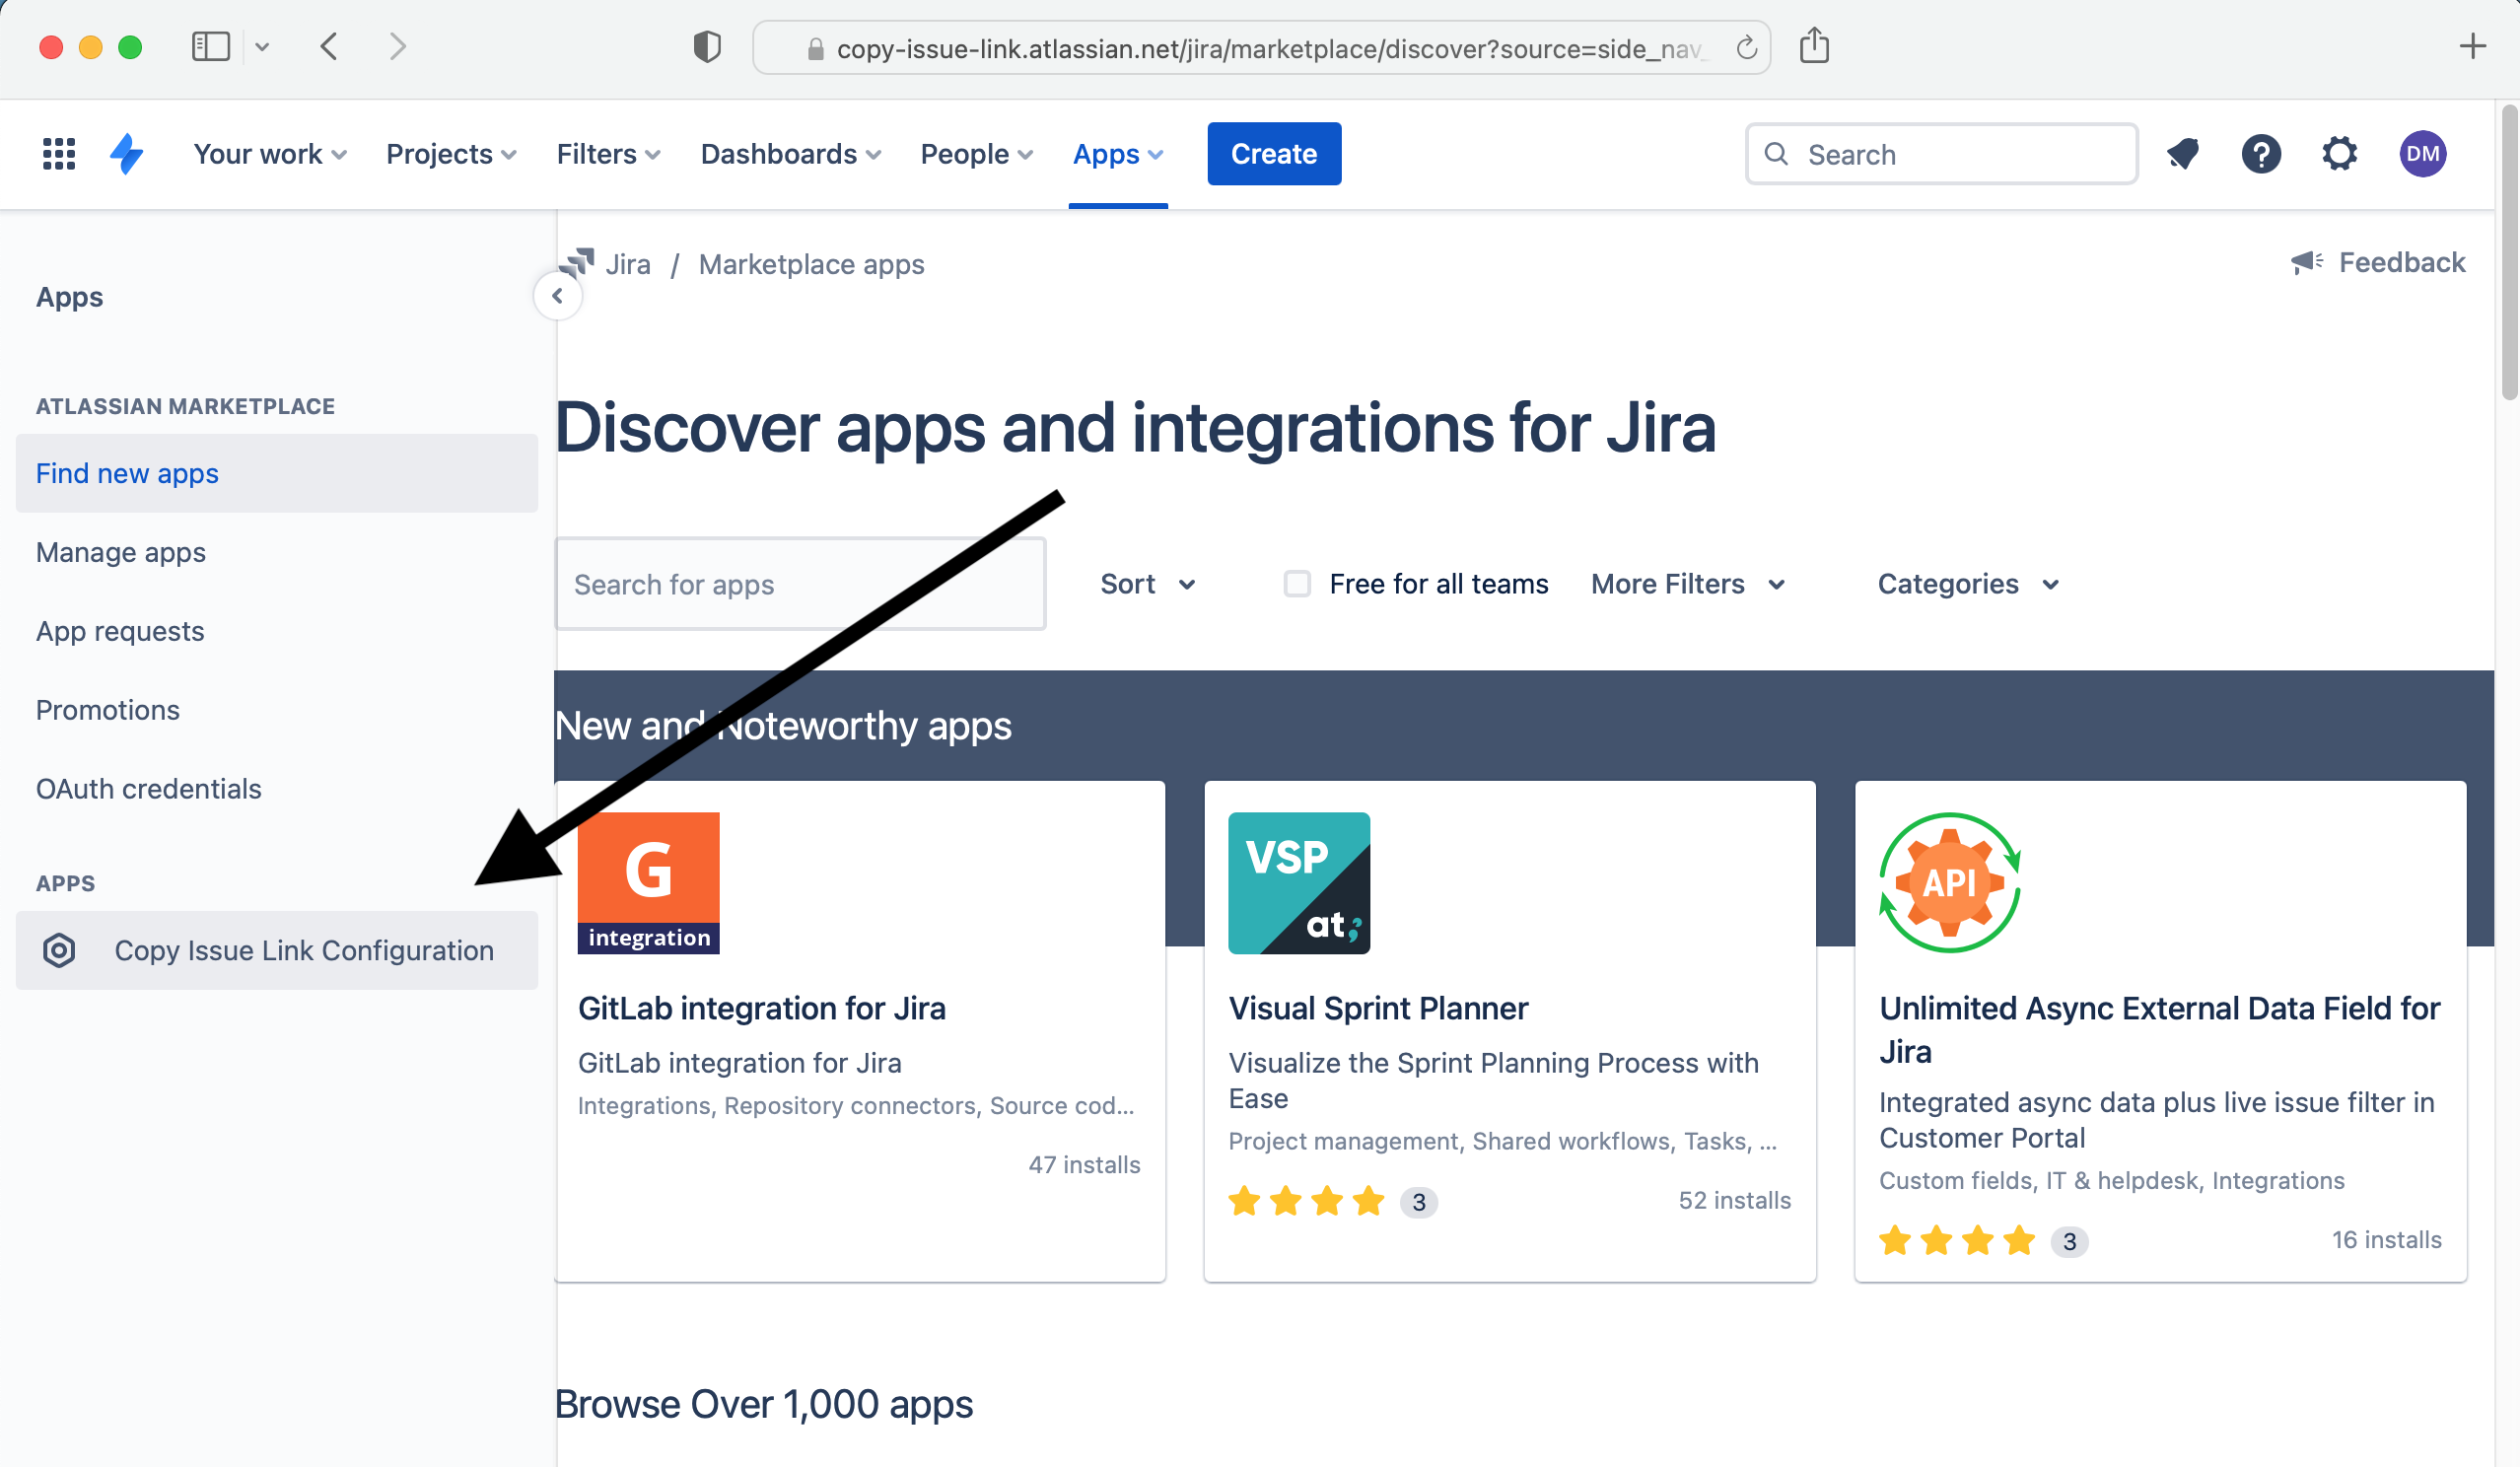 jira-marketplace-apps-management